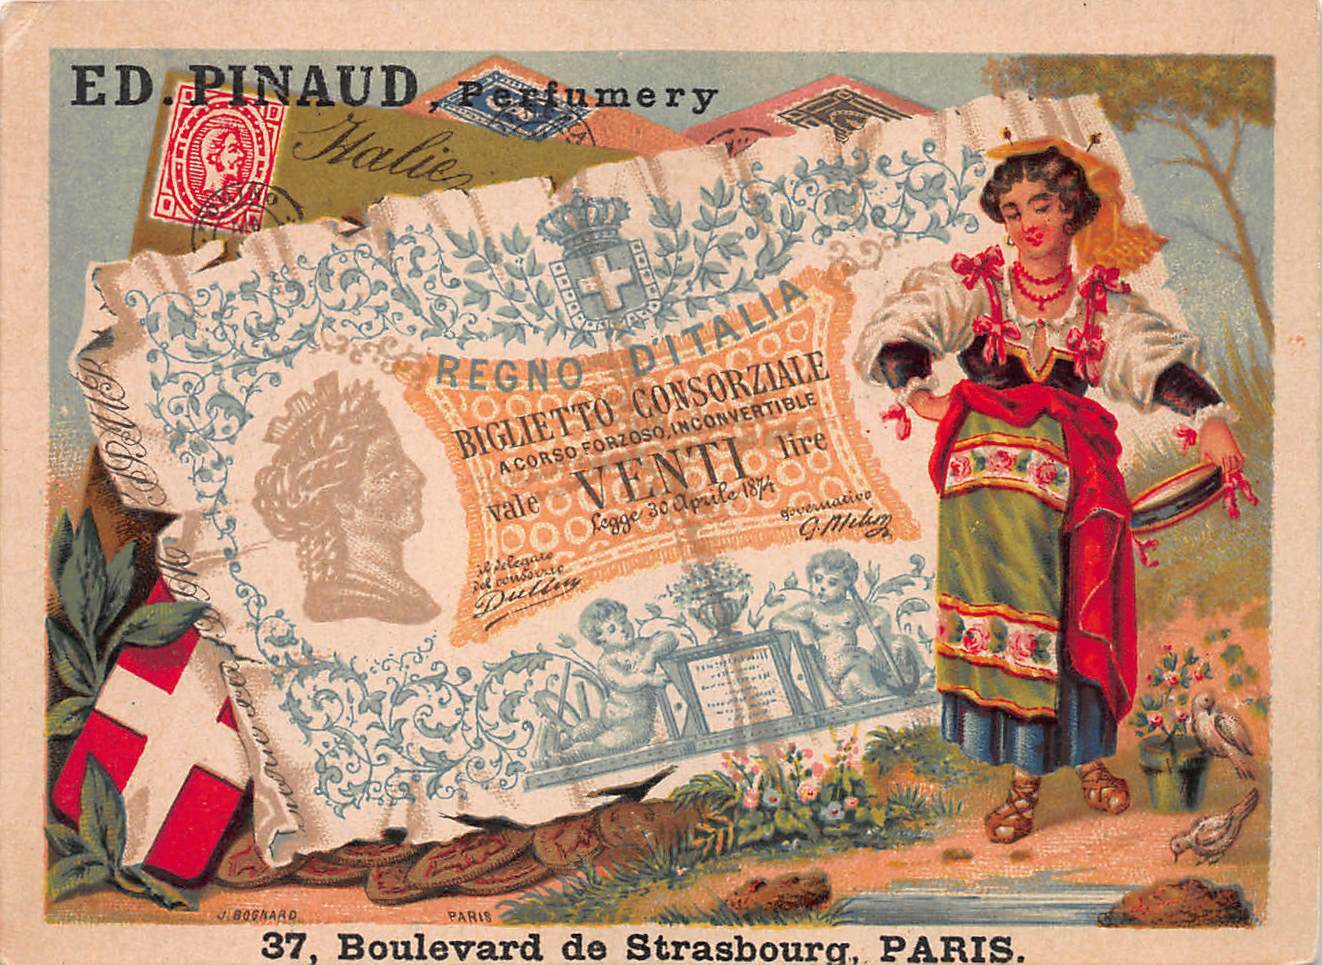 Ed Pinaud - Perfumery, Paris, France, 19th Century Trade Card